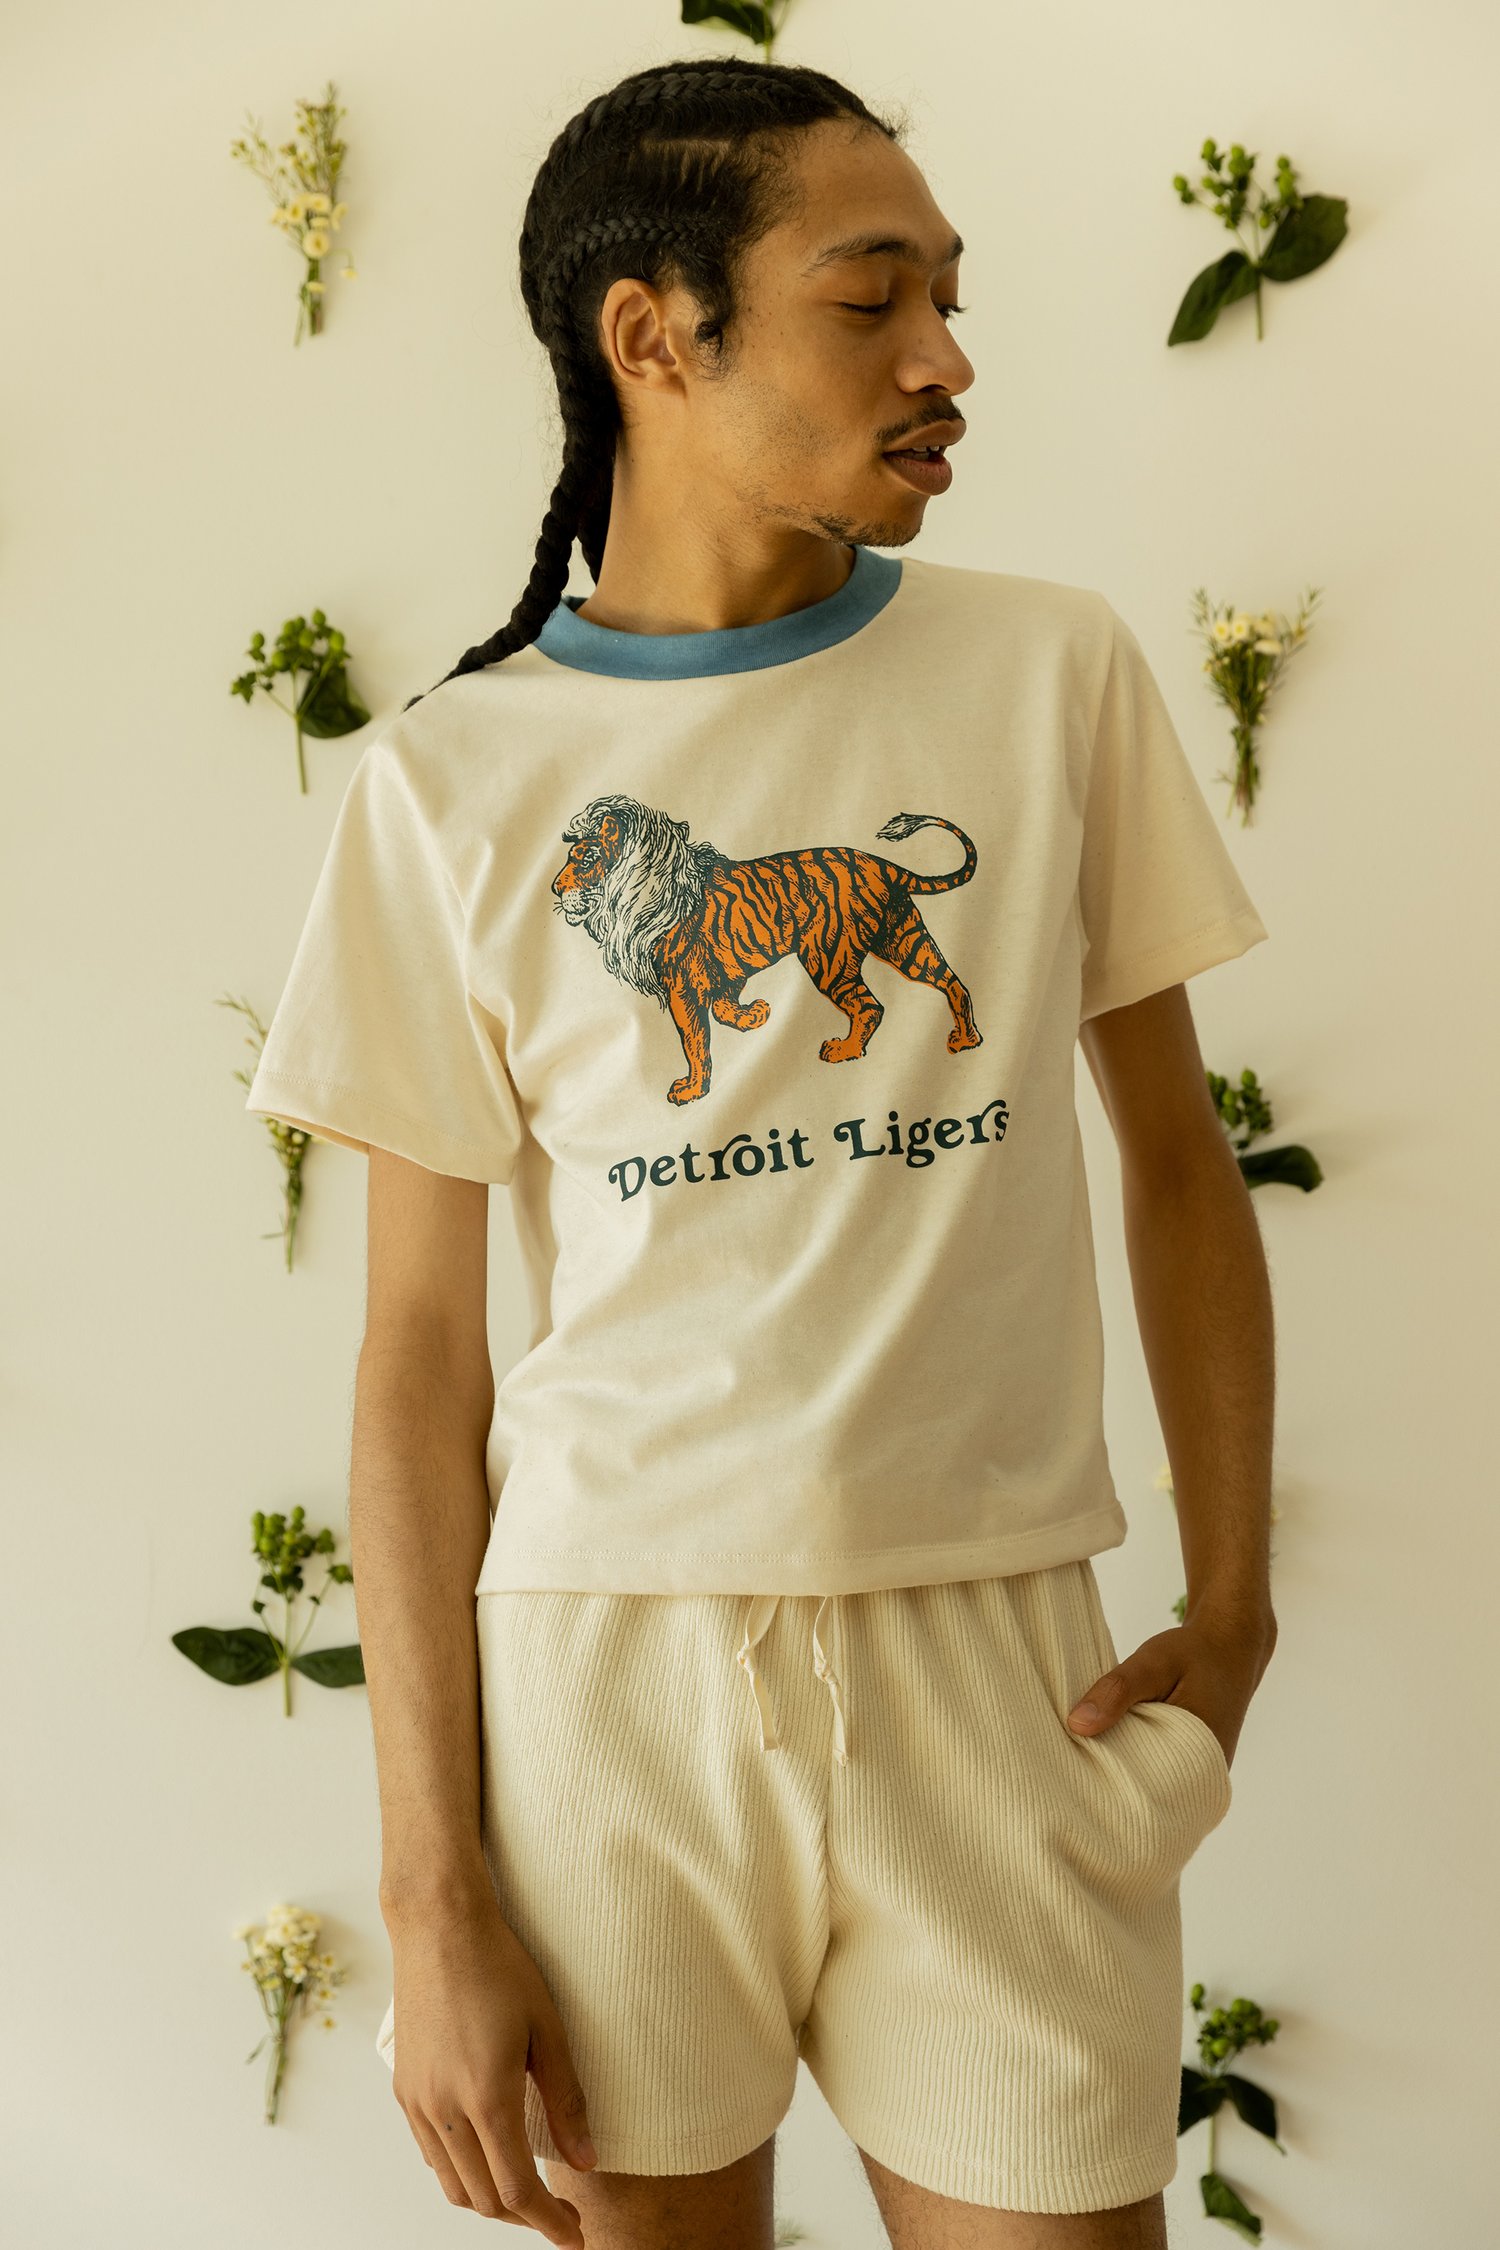 detroit tiger clothing apparel